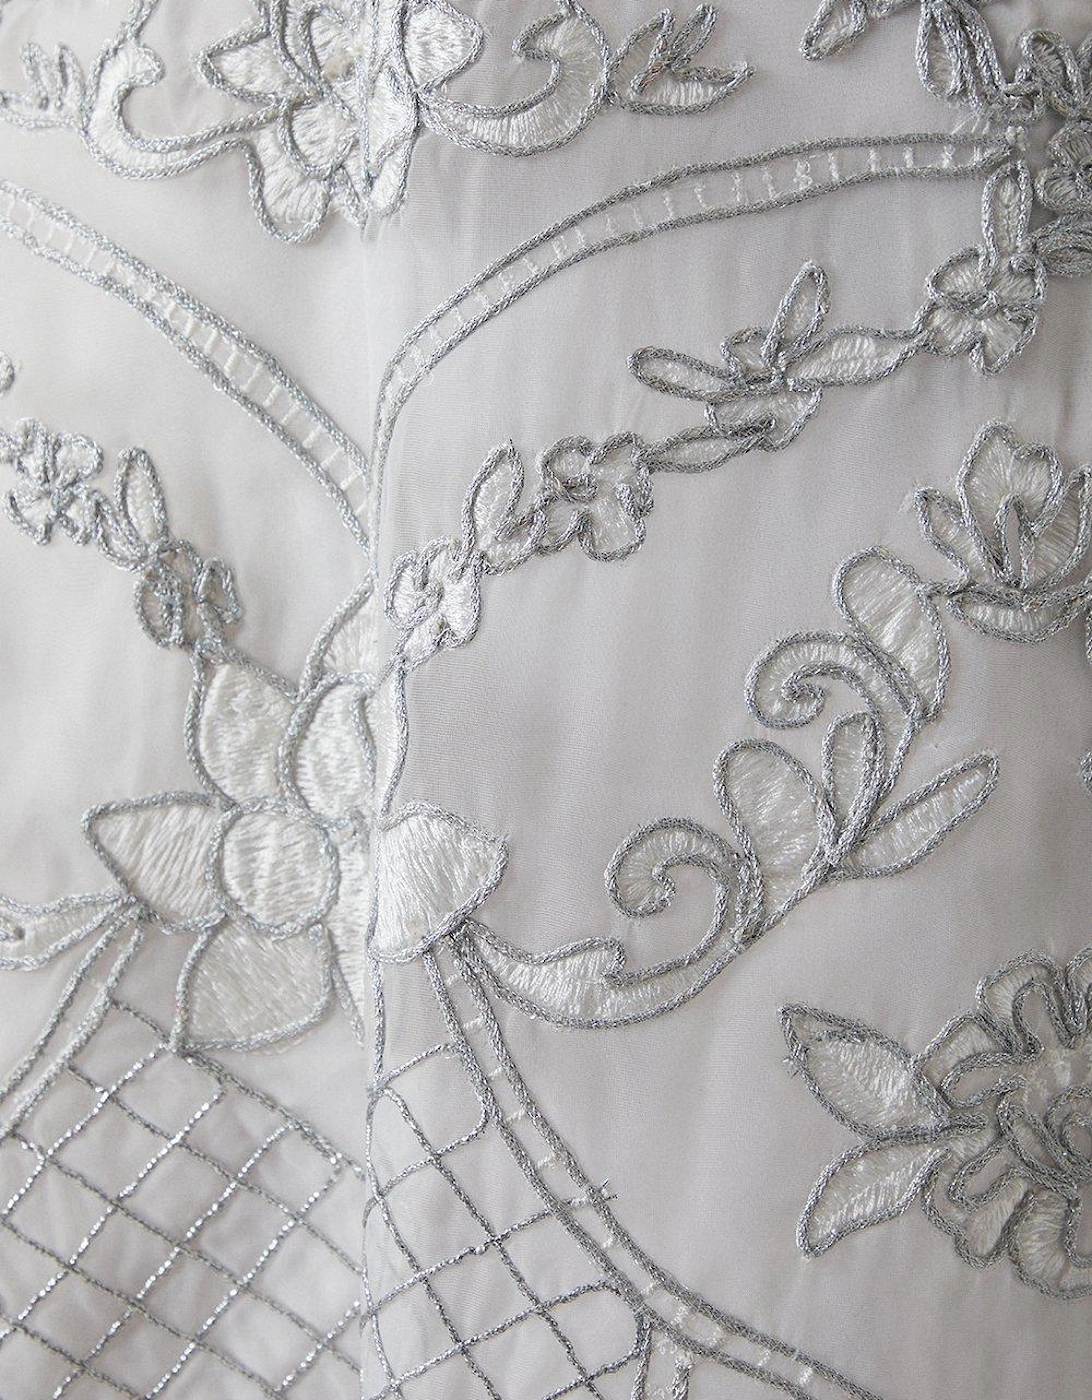 Premium Metallic Embroidered Organza Midi Wedding Dress